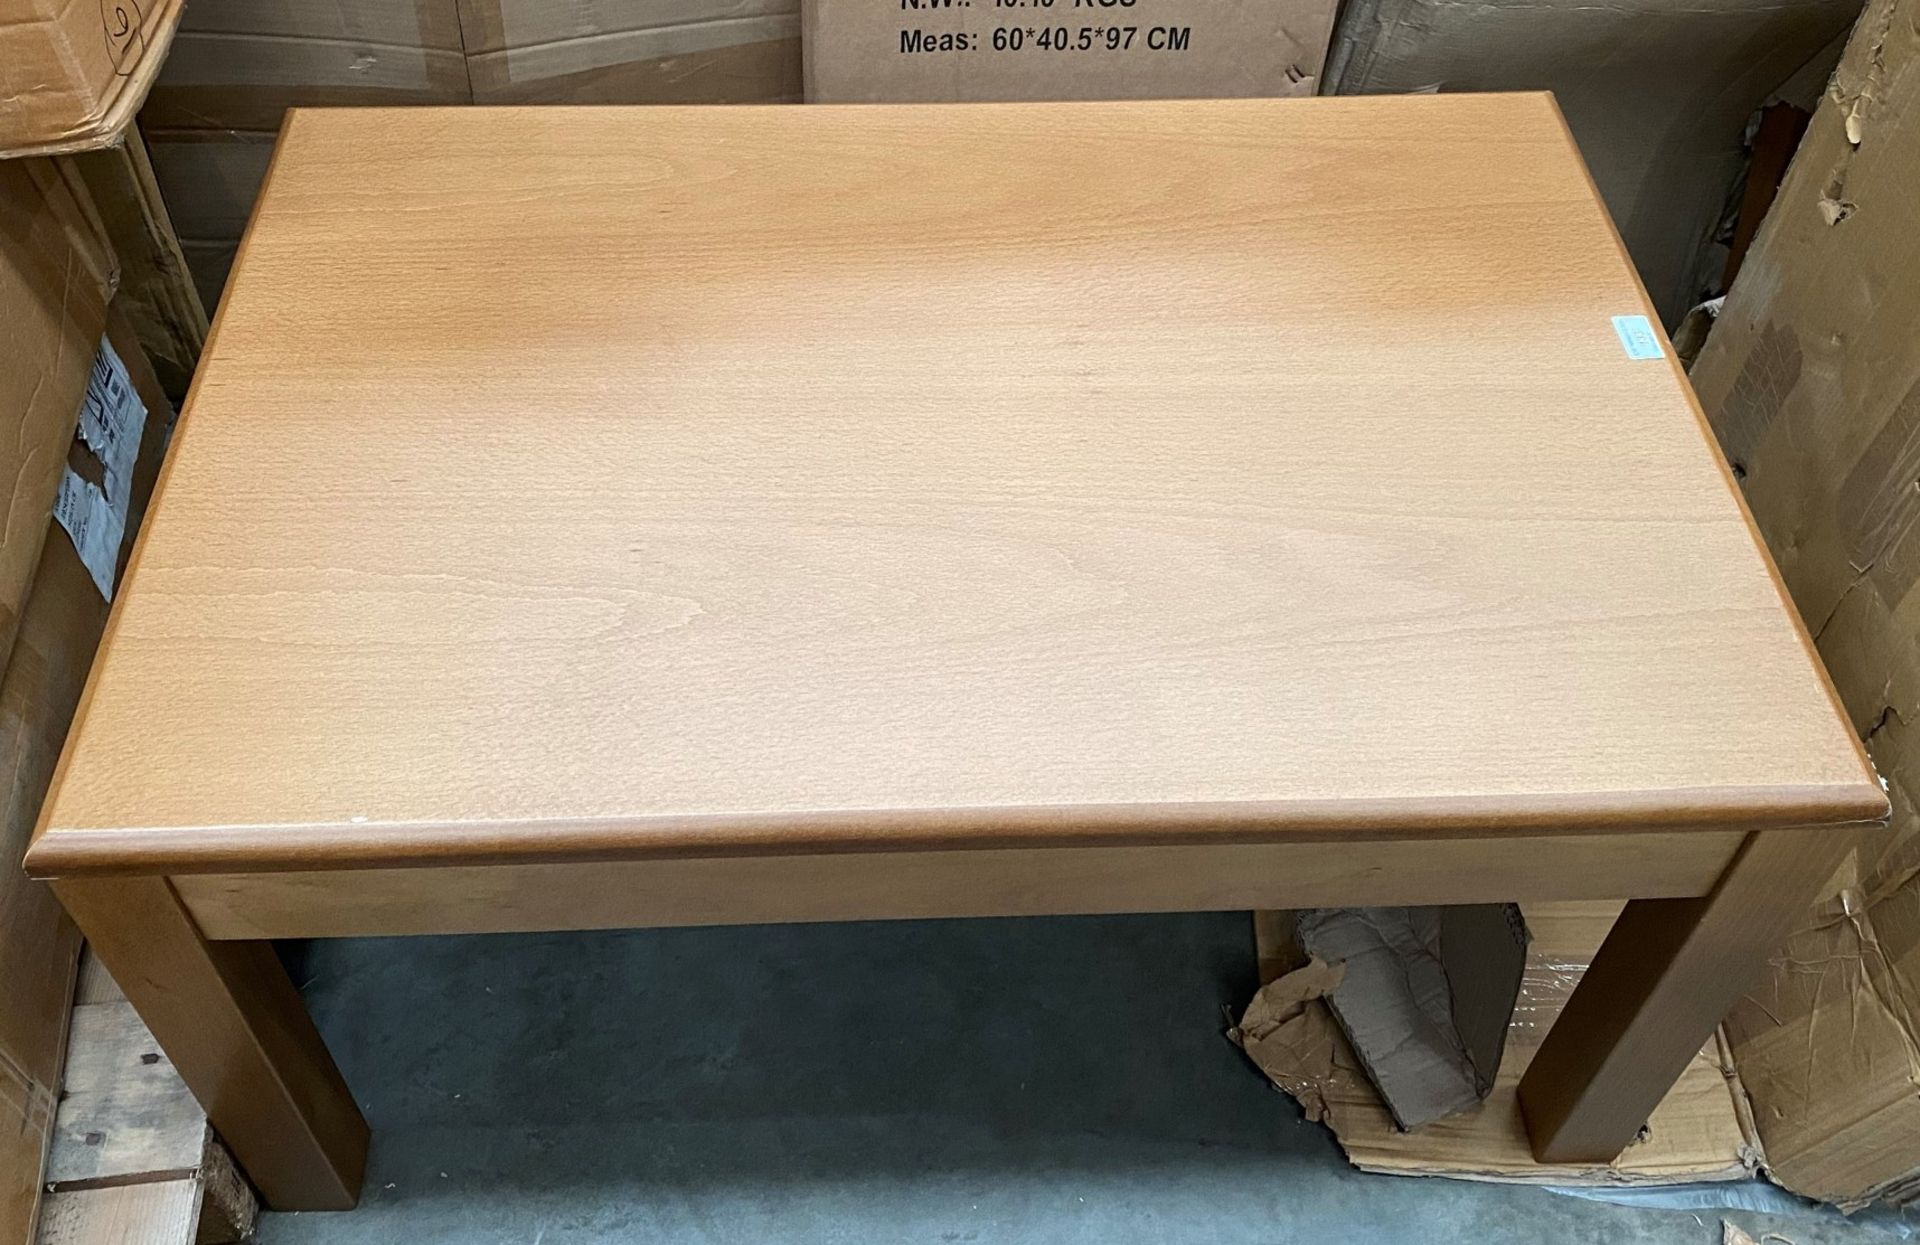 Hardwood finish coffee table - 60cm x 90cm x 45 - built up - slight damage to corners - Image 2 of 2